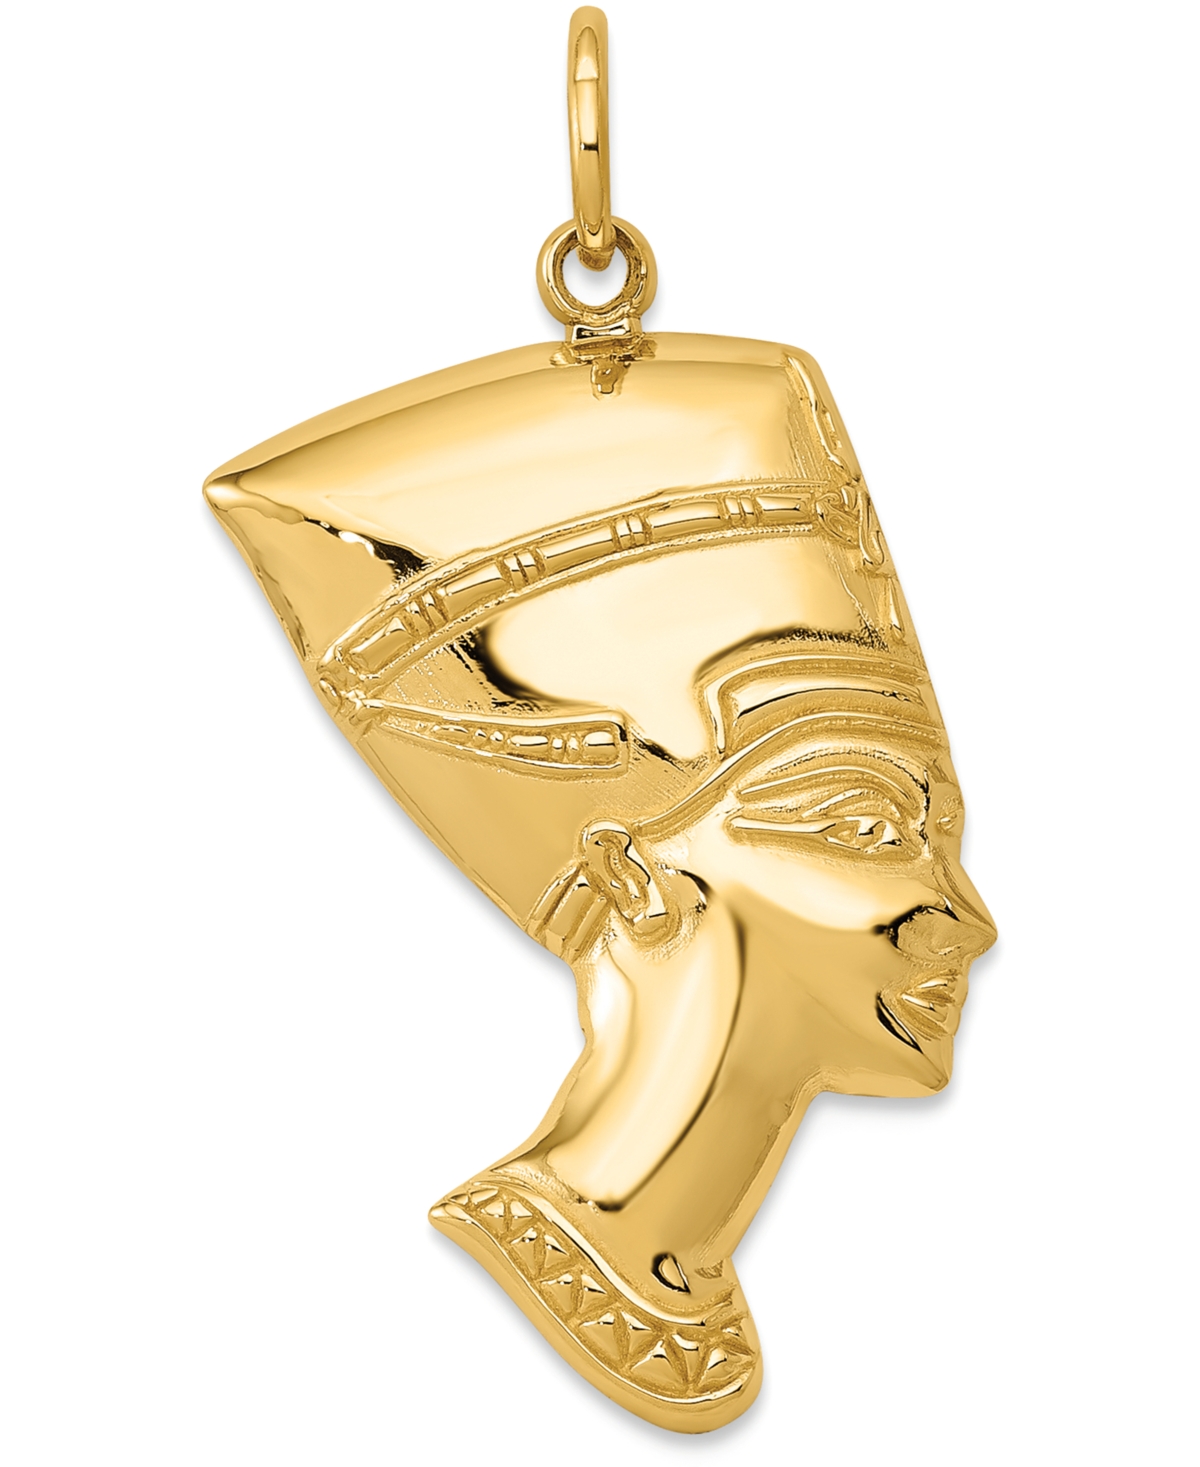 Nefertiti Charm Pendant in 14k Yellow Gold - Yellow Gold